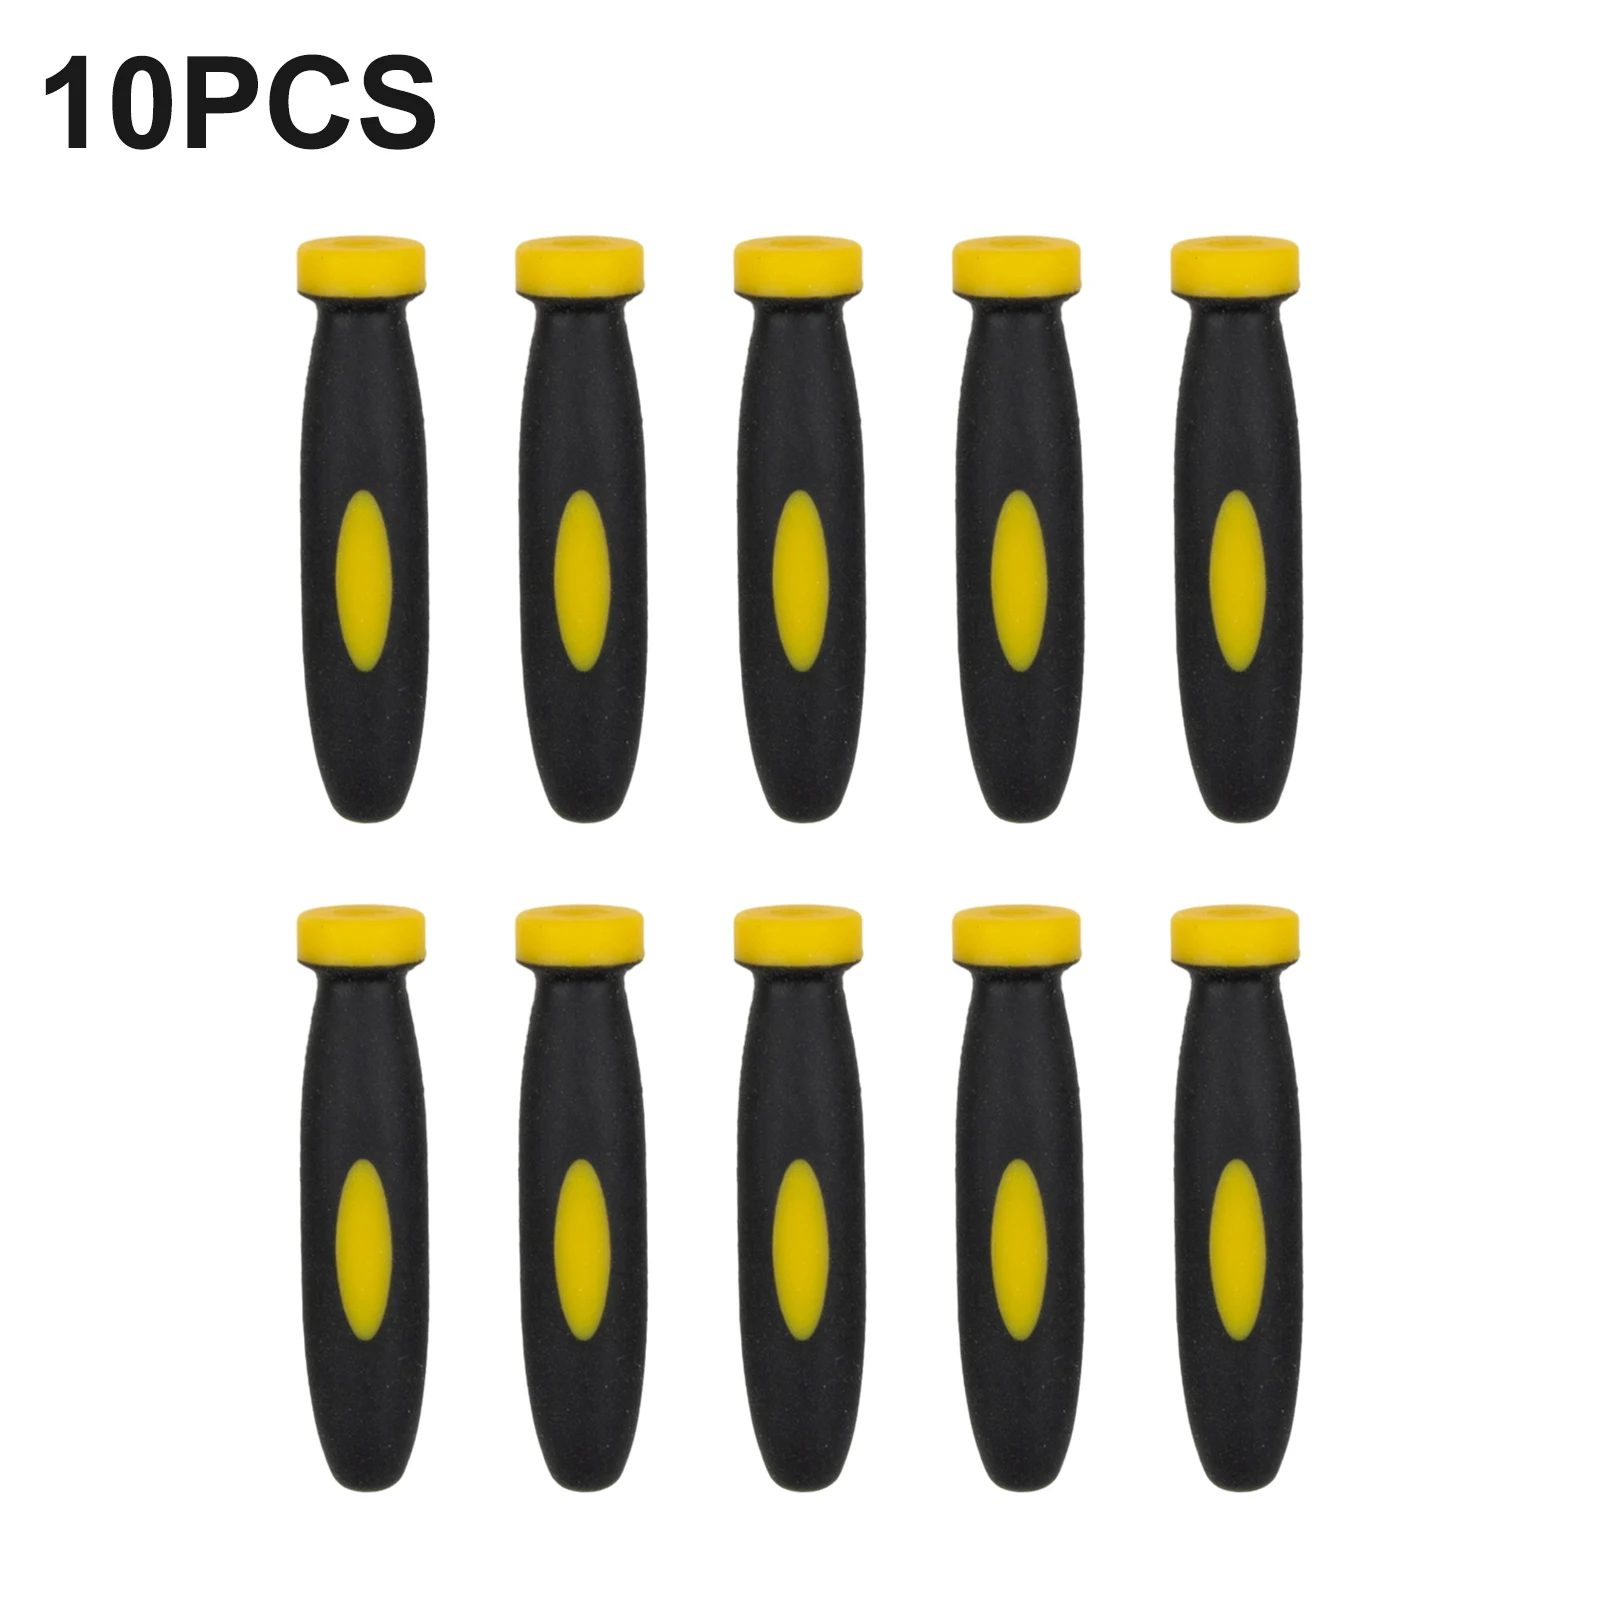 

10Pcs Durable Rubber Files Handles Files Supplies 2.36Inch 3mm Hole Diameter Anti Slip File Handle Replacement